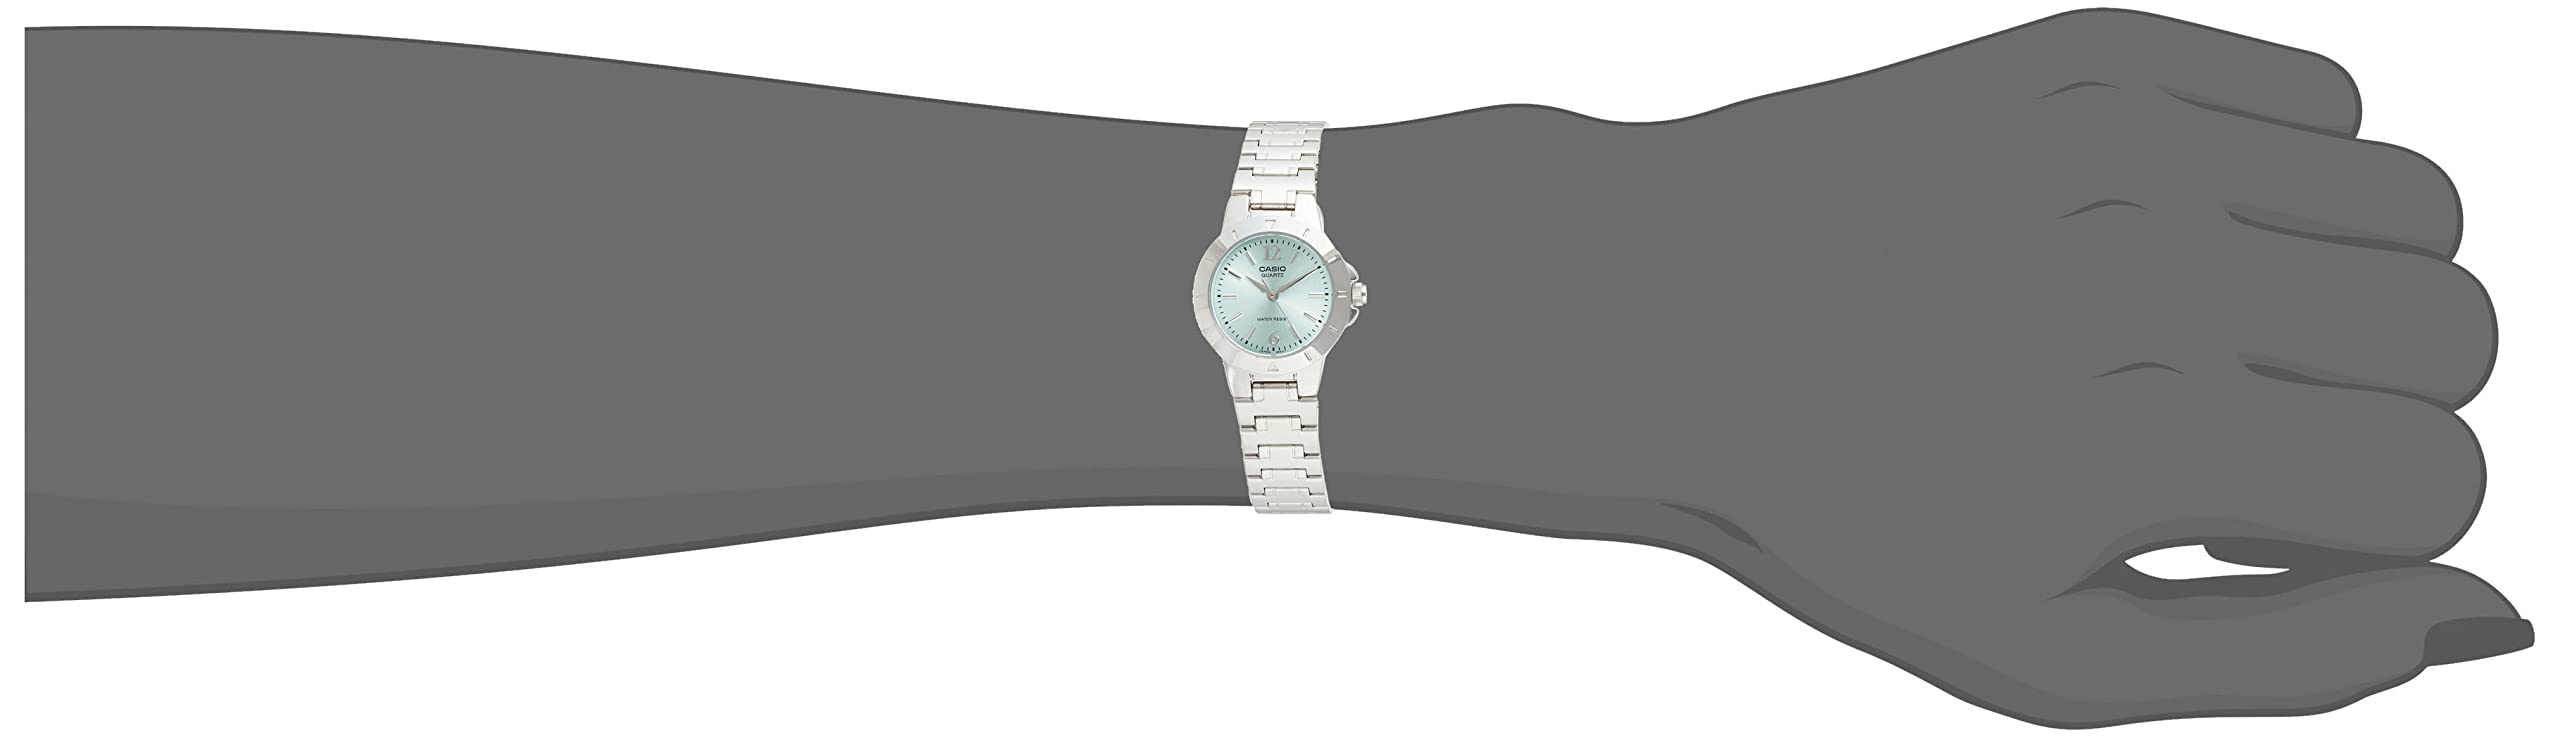 Casio Women's LTP-1177A-4A1 Dress Analog Display Quartz Silver Watch